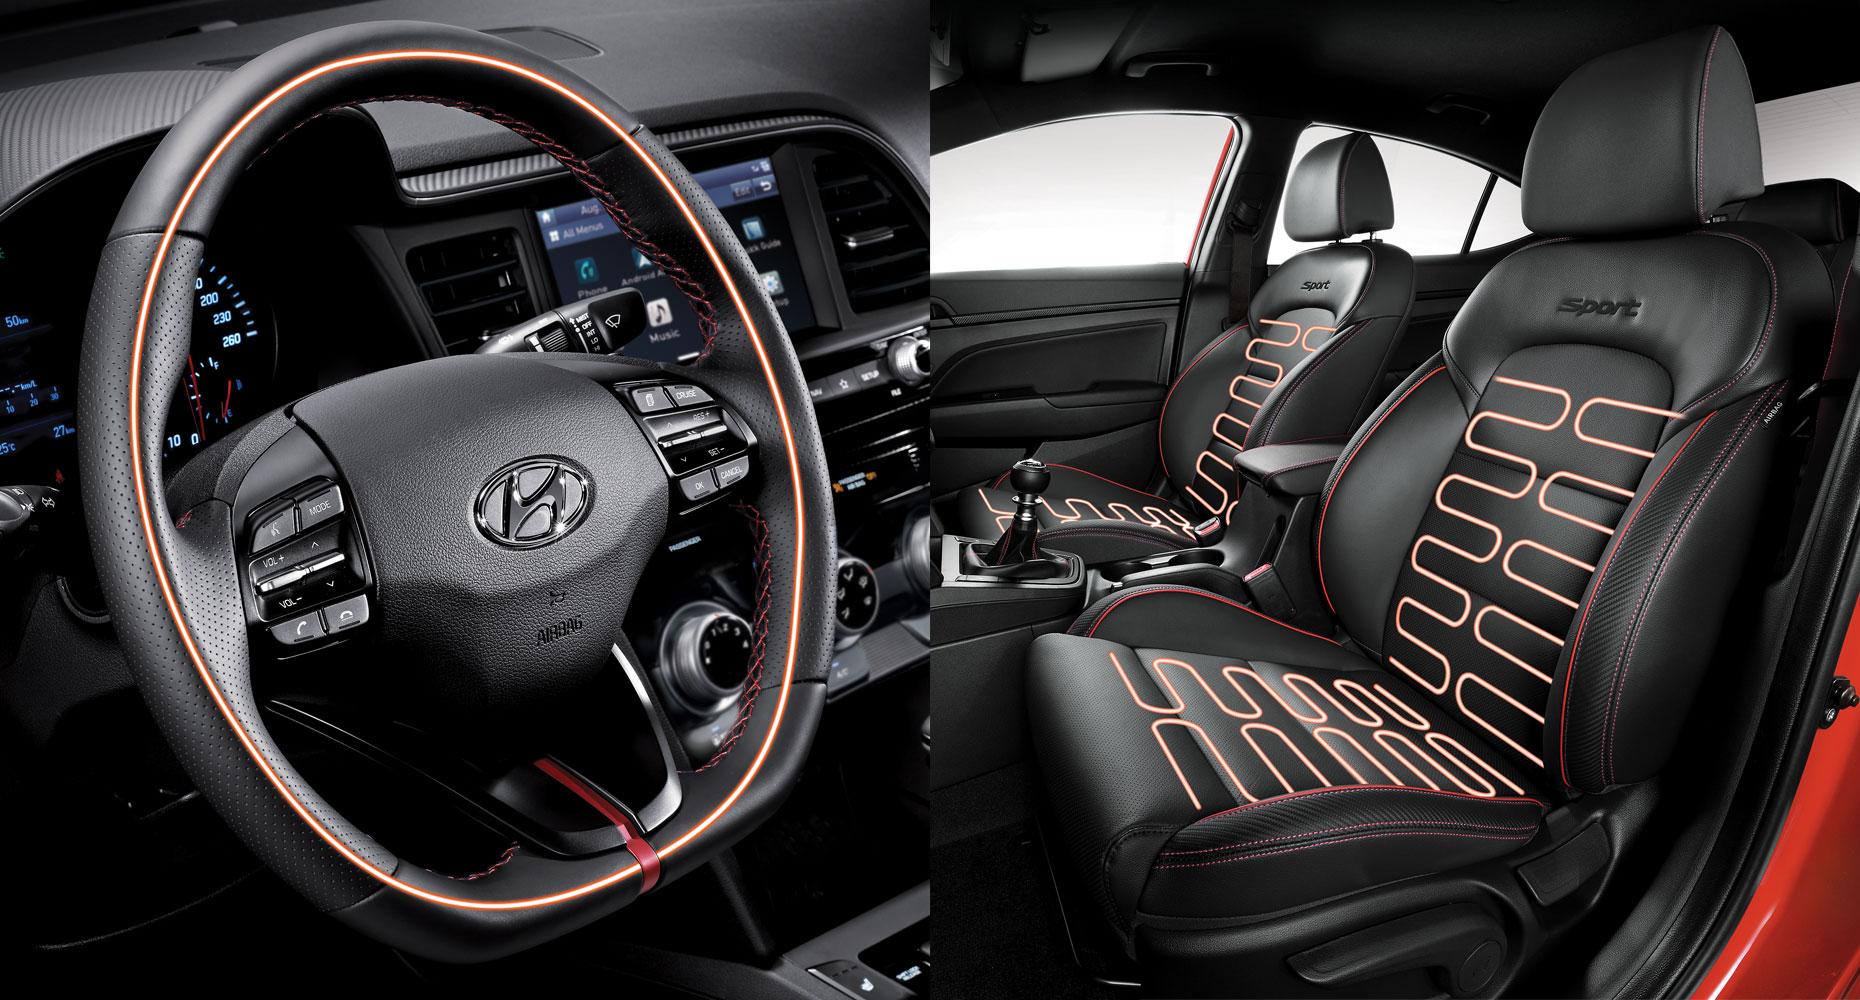 30 HQ Pictures Elantra Gt Sport 2020 / 2018 Hyundai Elantra GT Sport Review: Finally a hot hatch ...